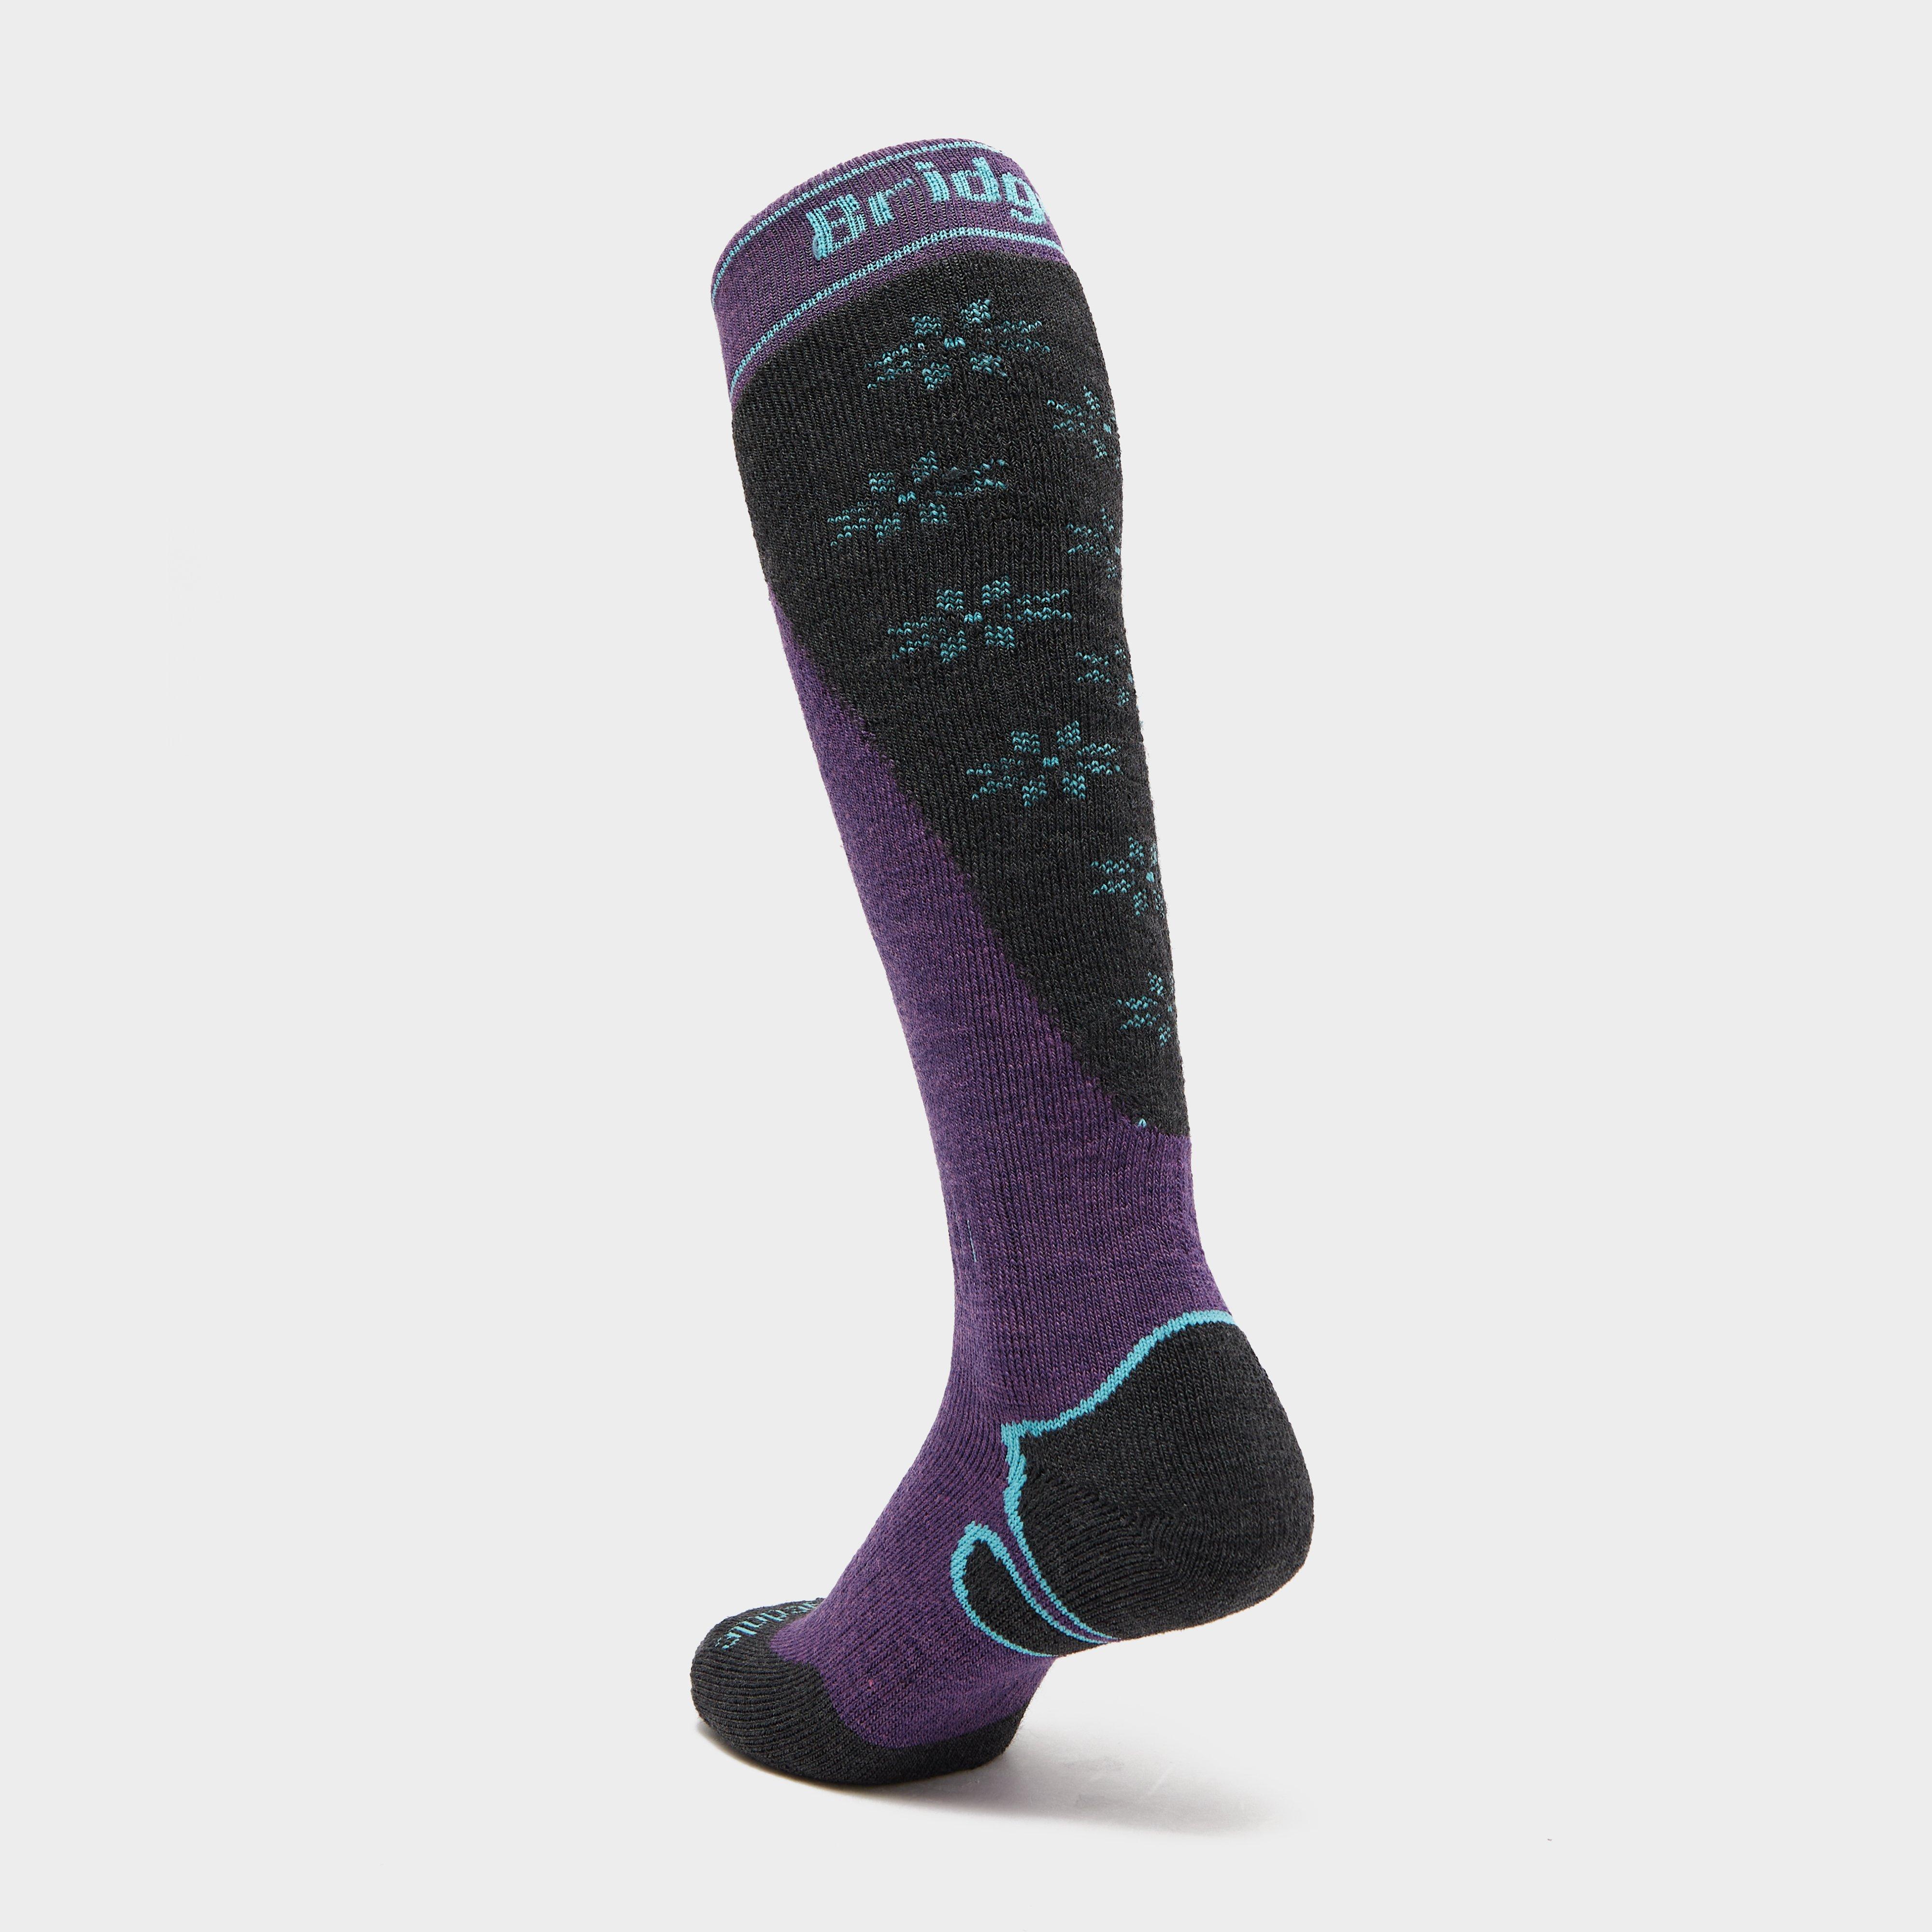 Bridgedale Womens' Merino Wool Plus Ski Sock Review